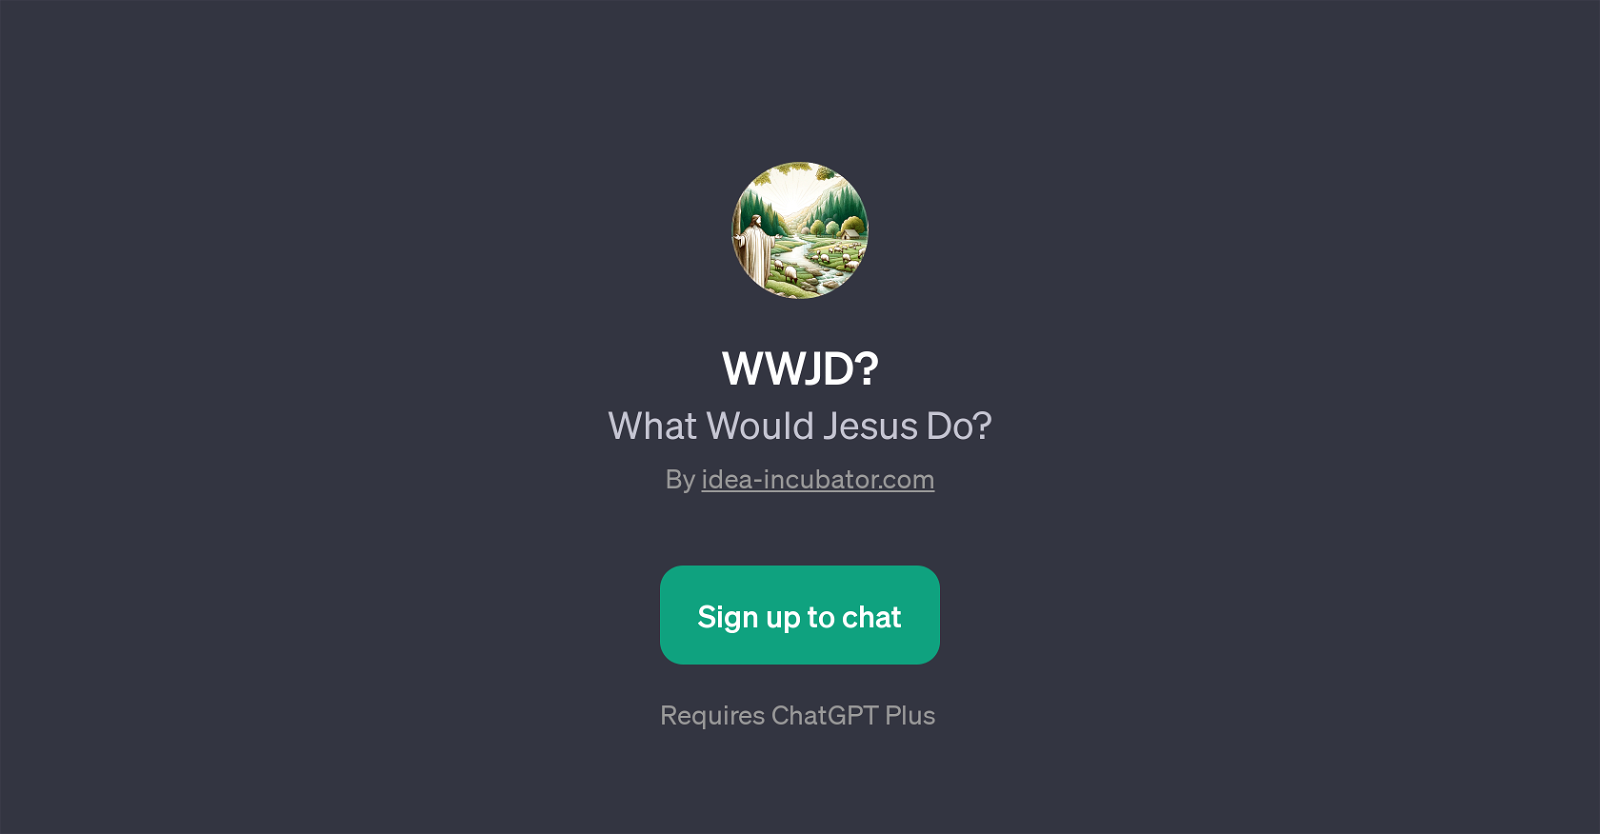 WWJD? website